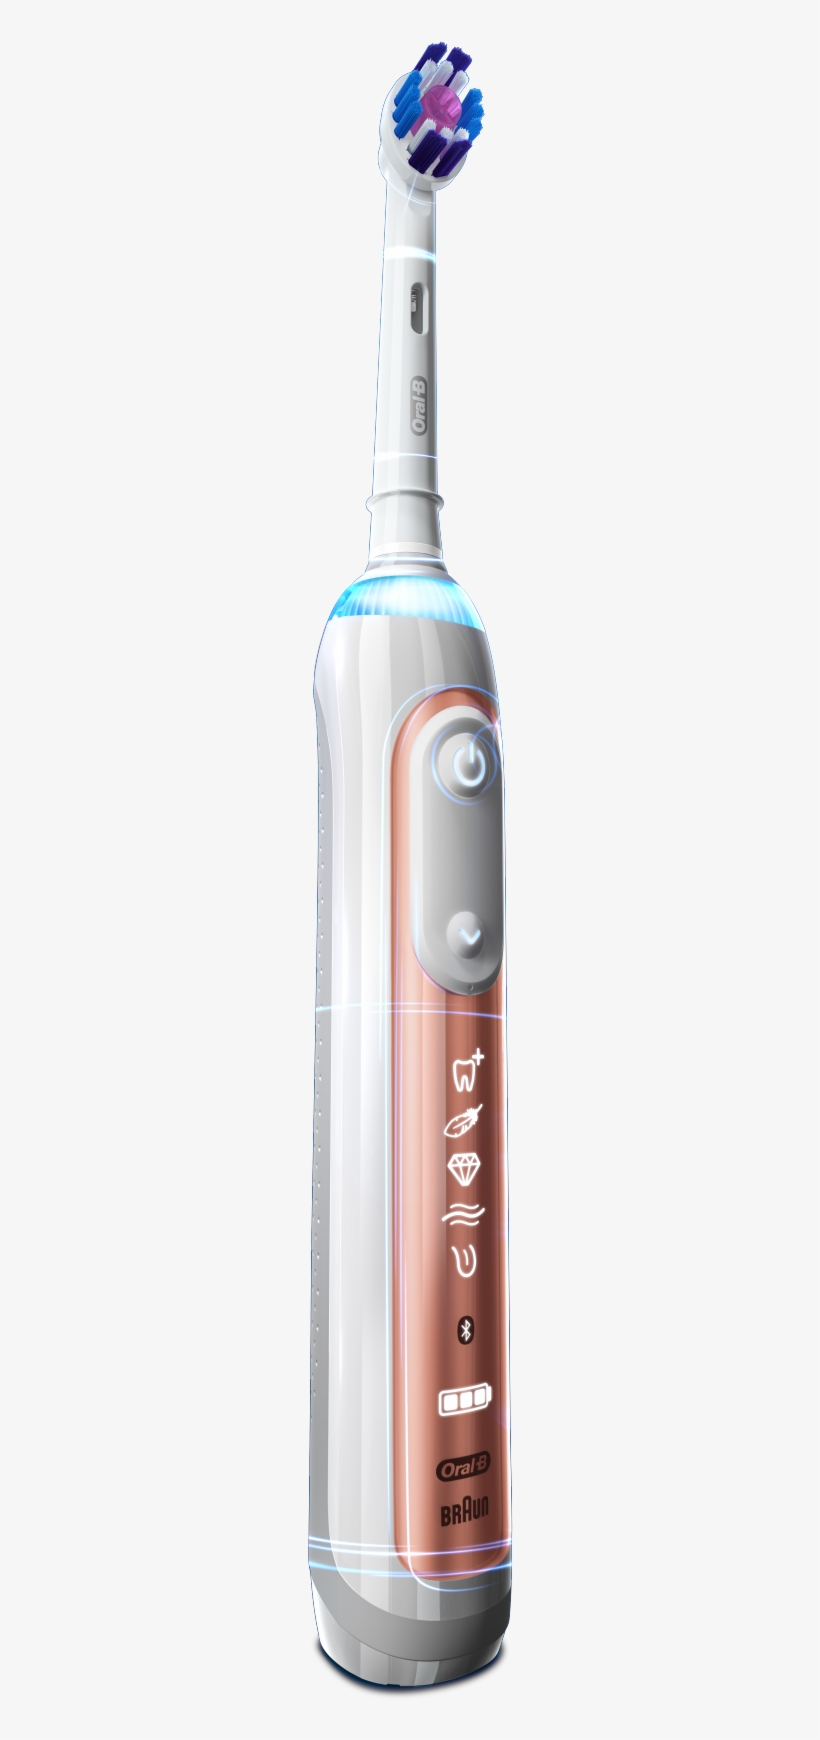 Oral-b 6000 Electric Toothbrush Deal - Vodka, transparent png #809860